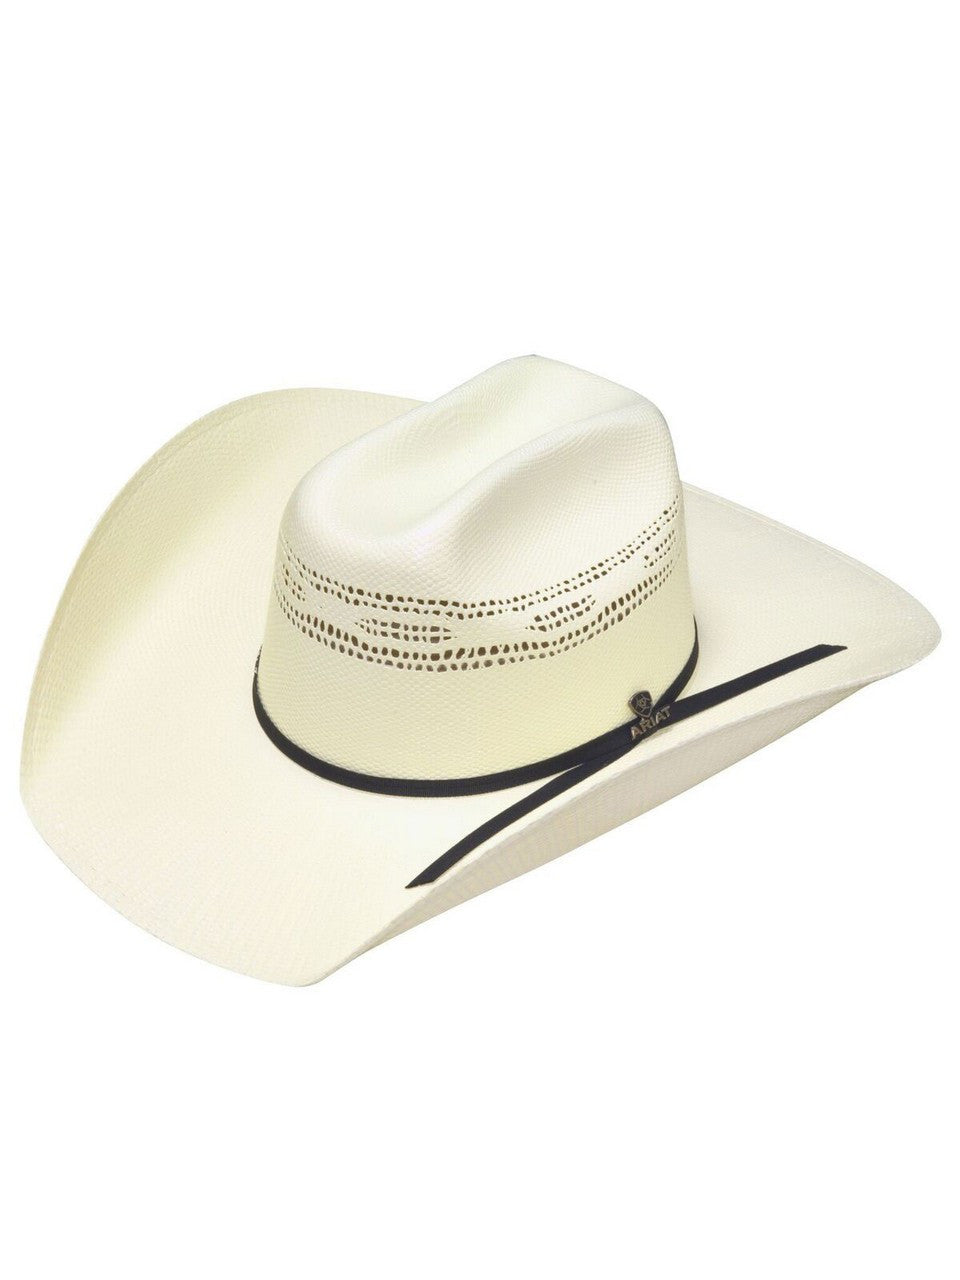 Ariat Bangora Cowboy Hat